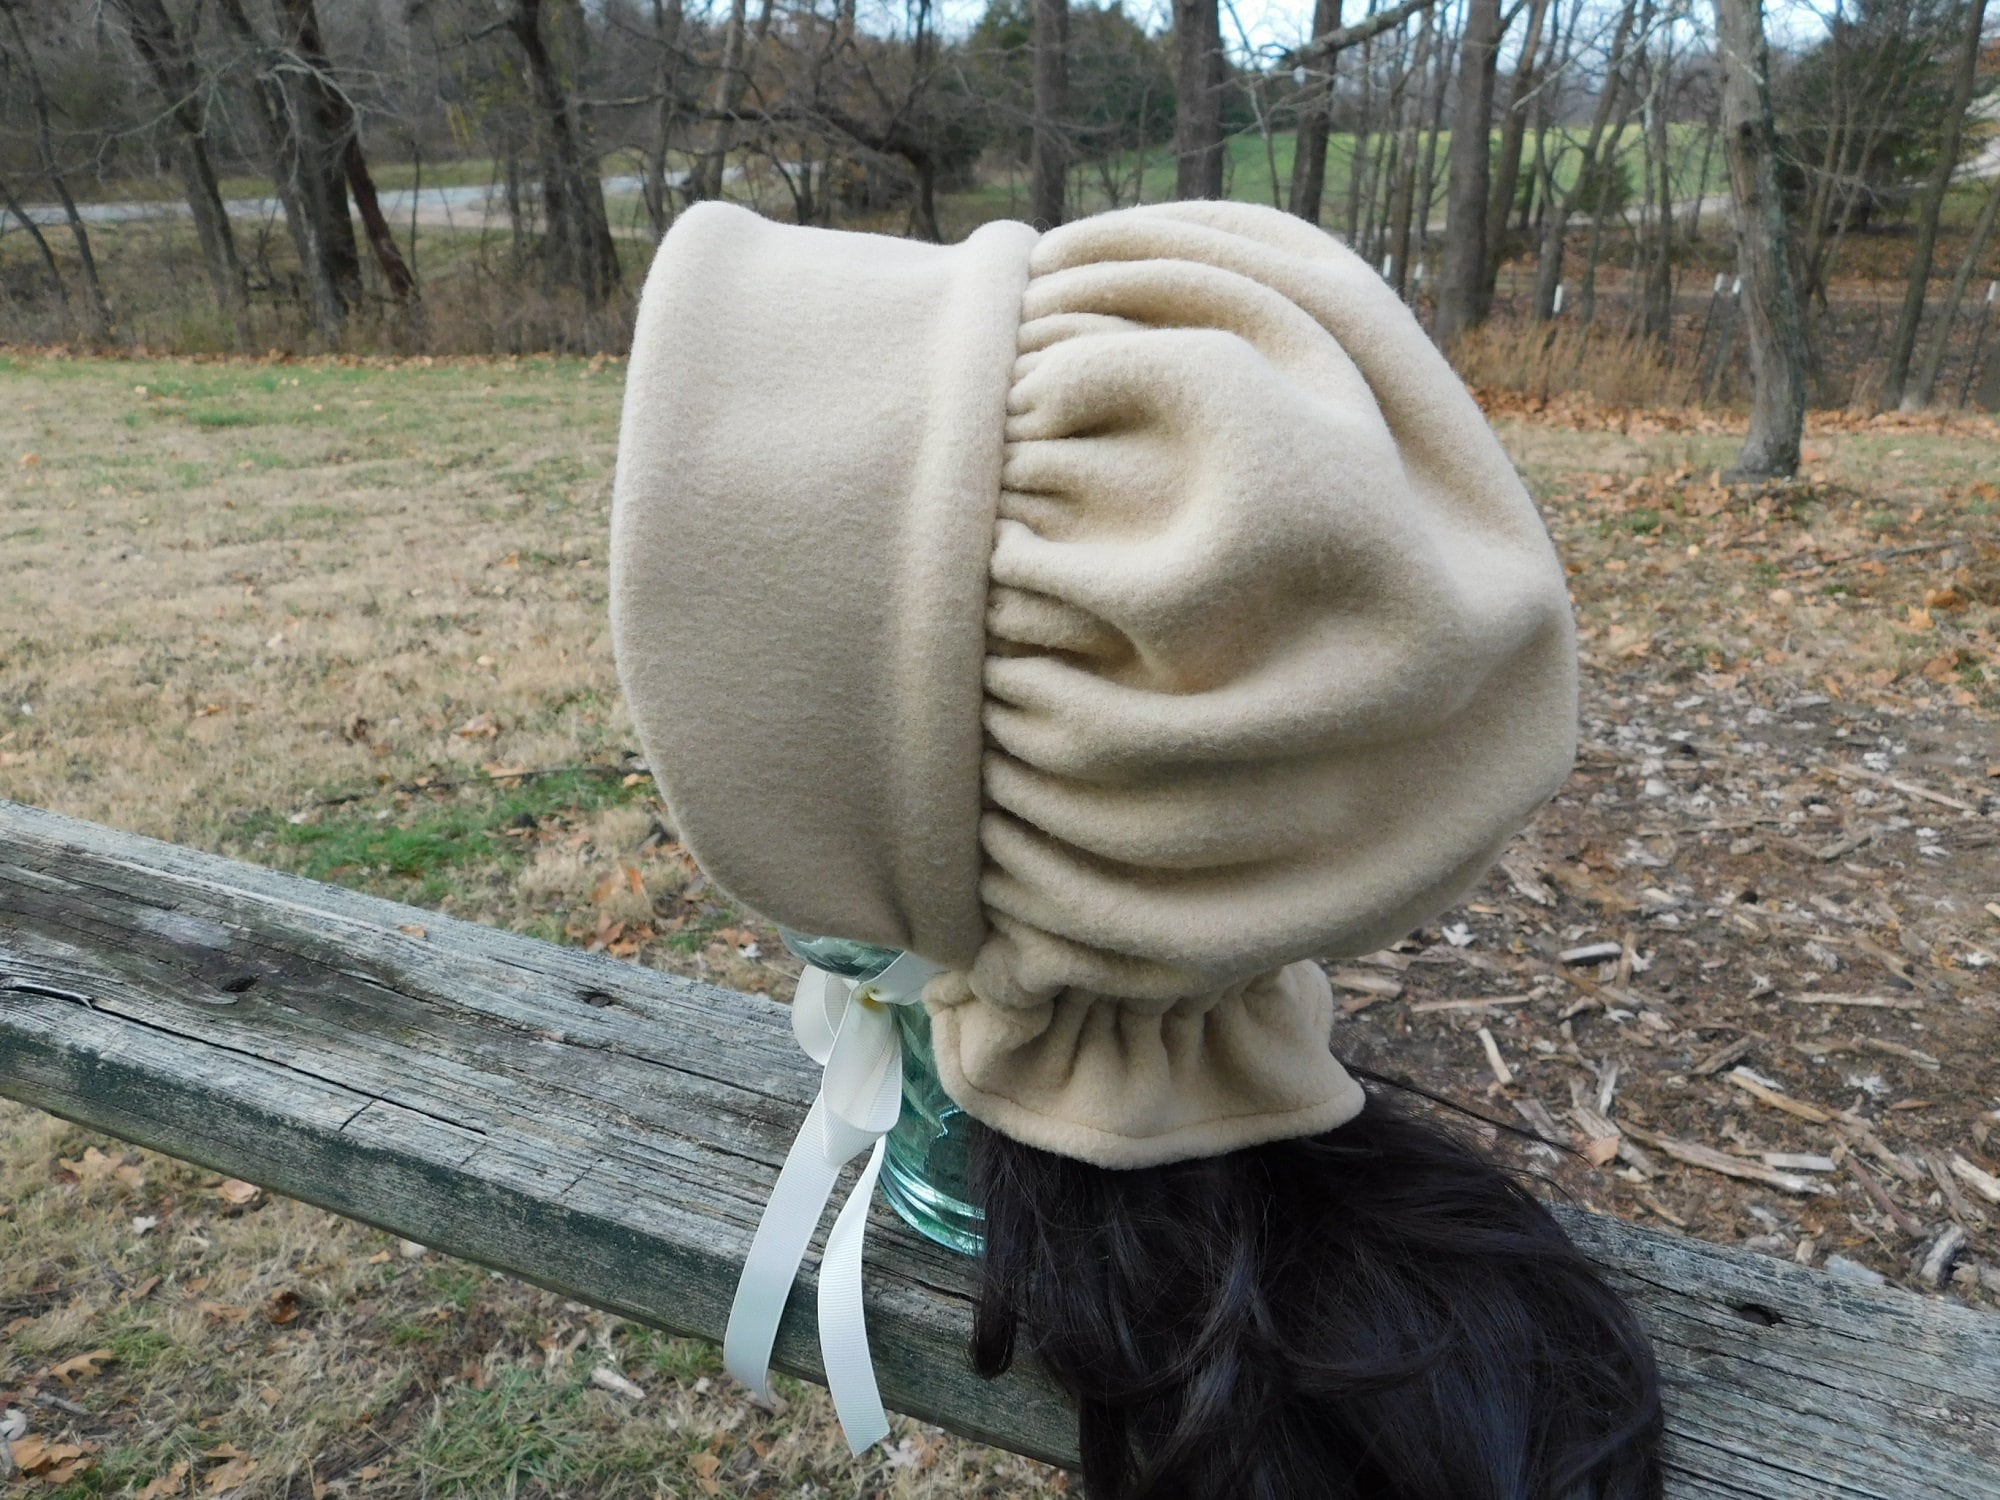 White Pioneer Women's Bonnet Hat Wide Brim Adult Prairie Costume Accessory  Amish